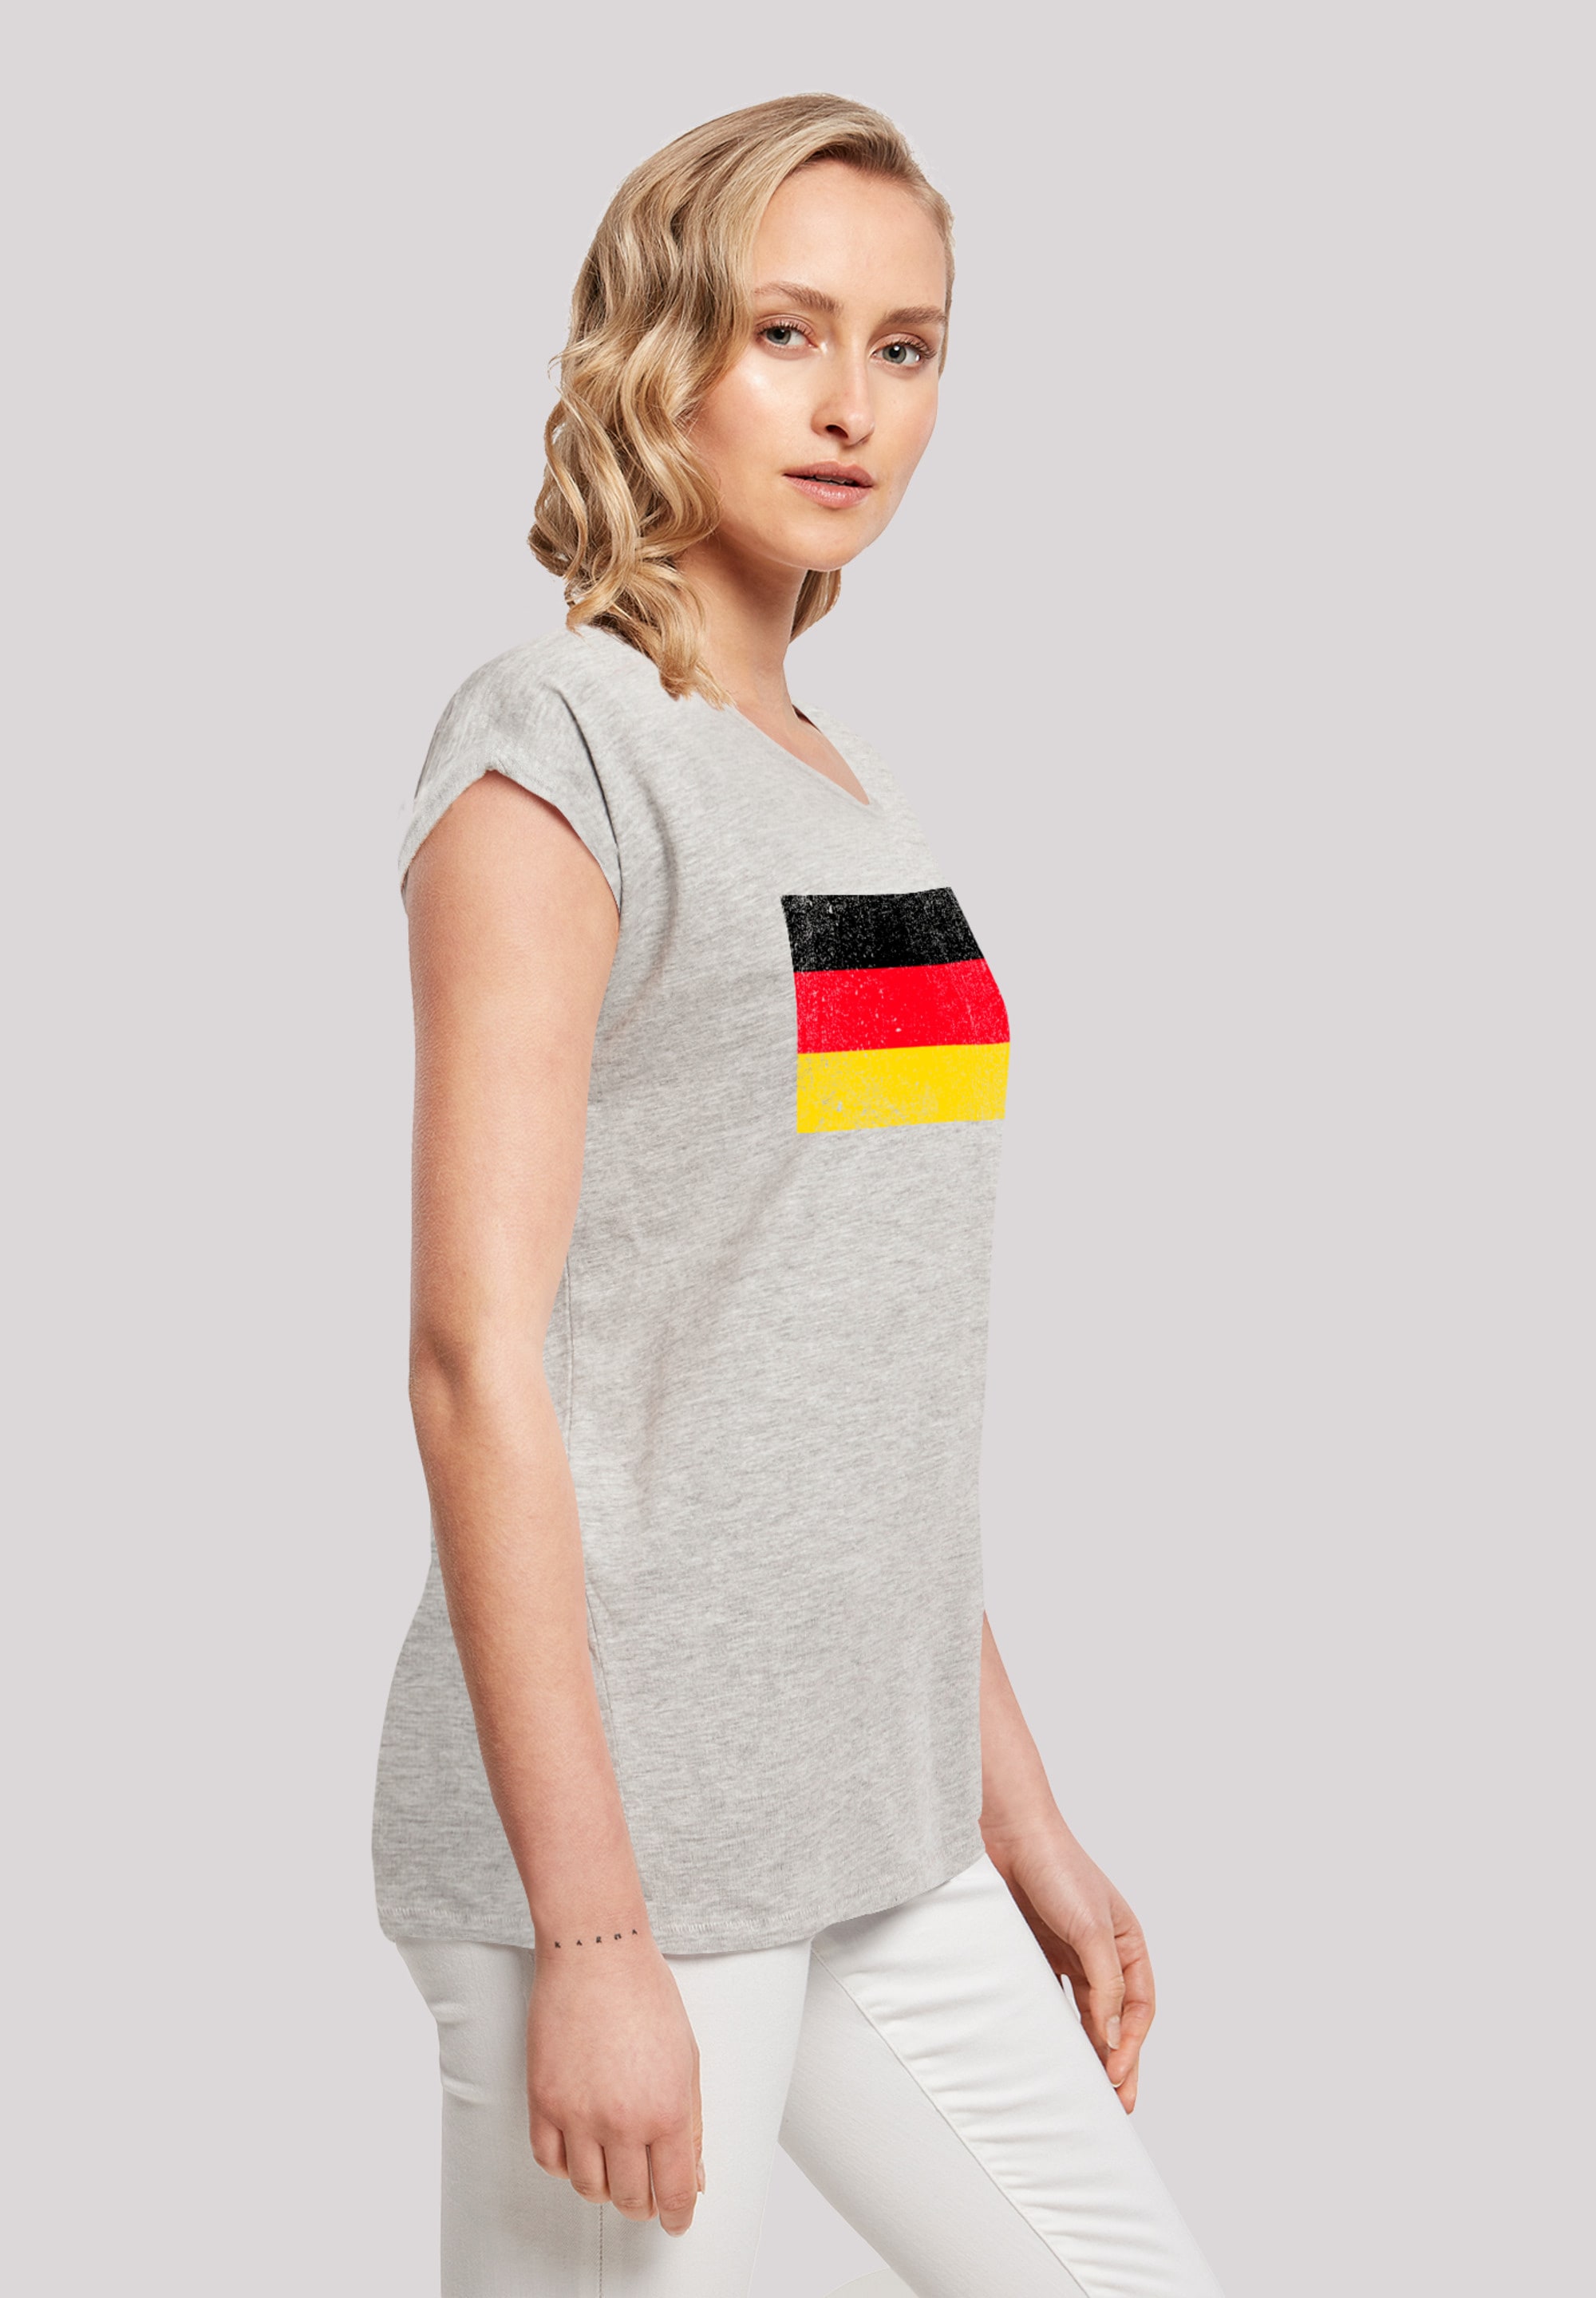 »Germany T-Shirt Print Flagge Deutschland kaufen F4NT4STIC distressed«,